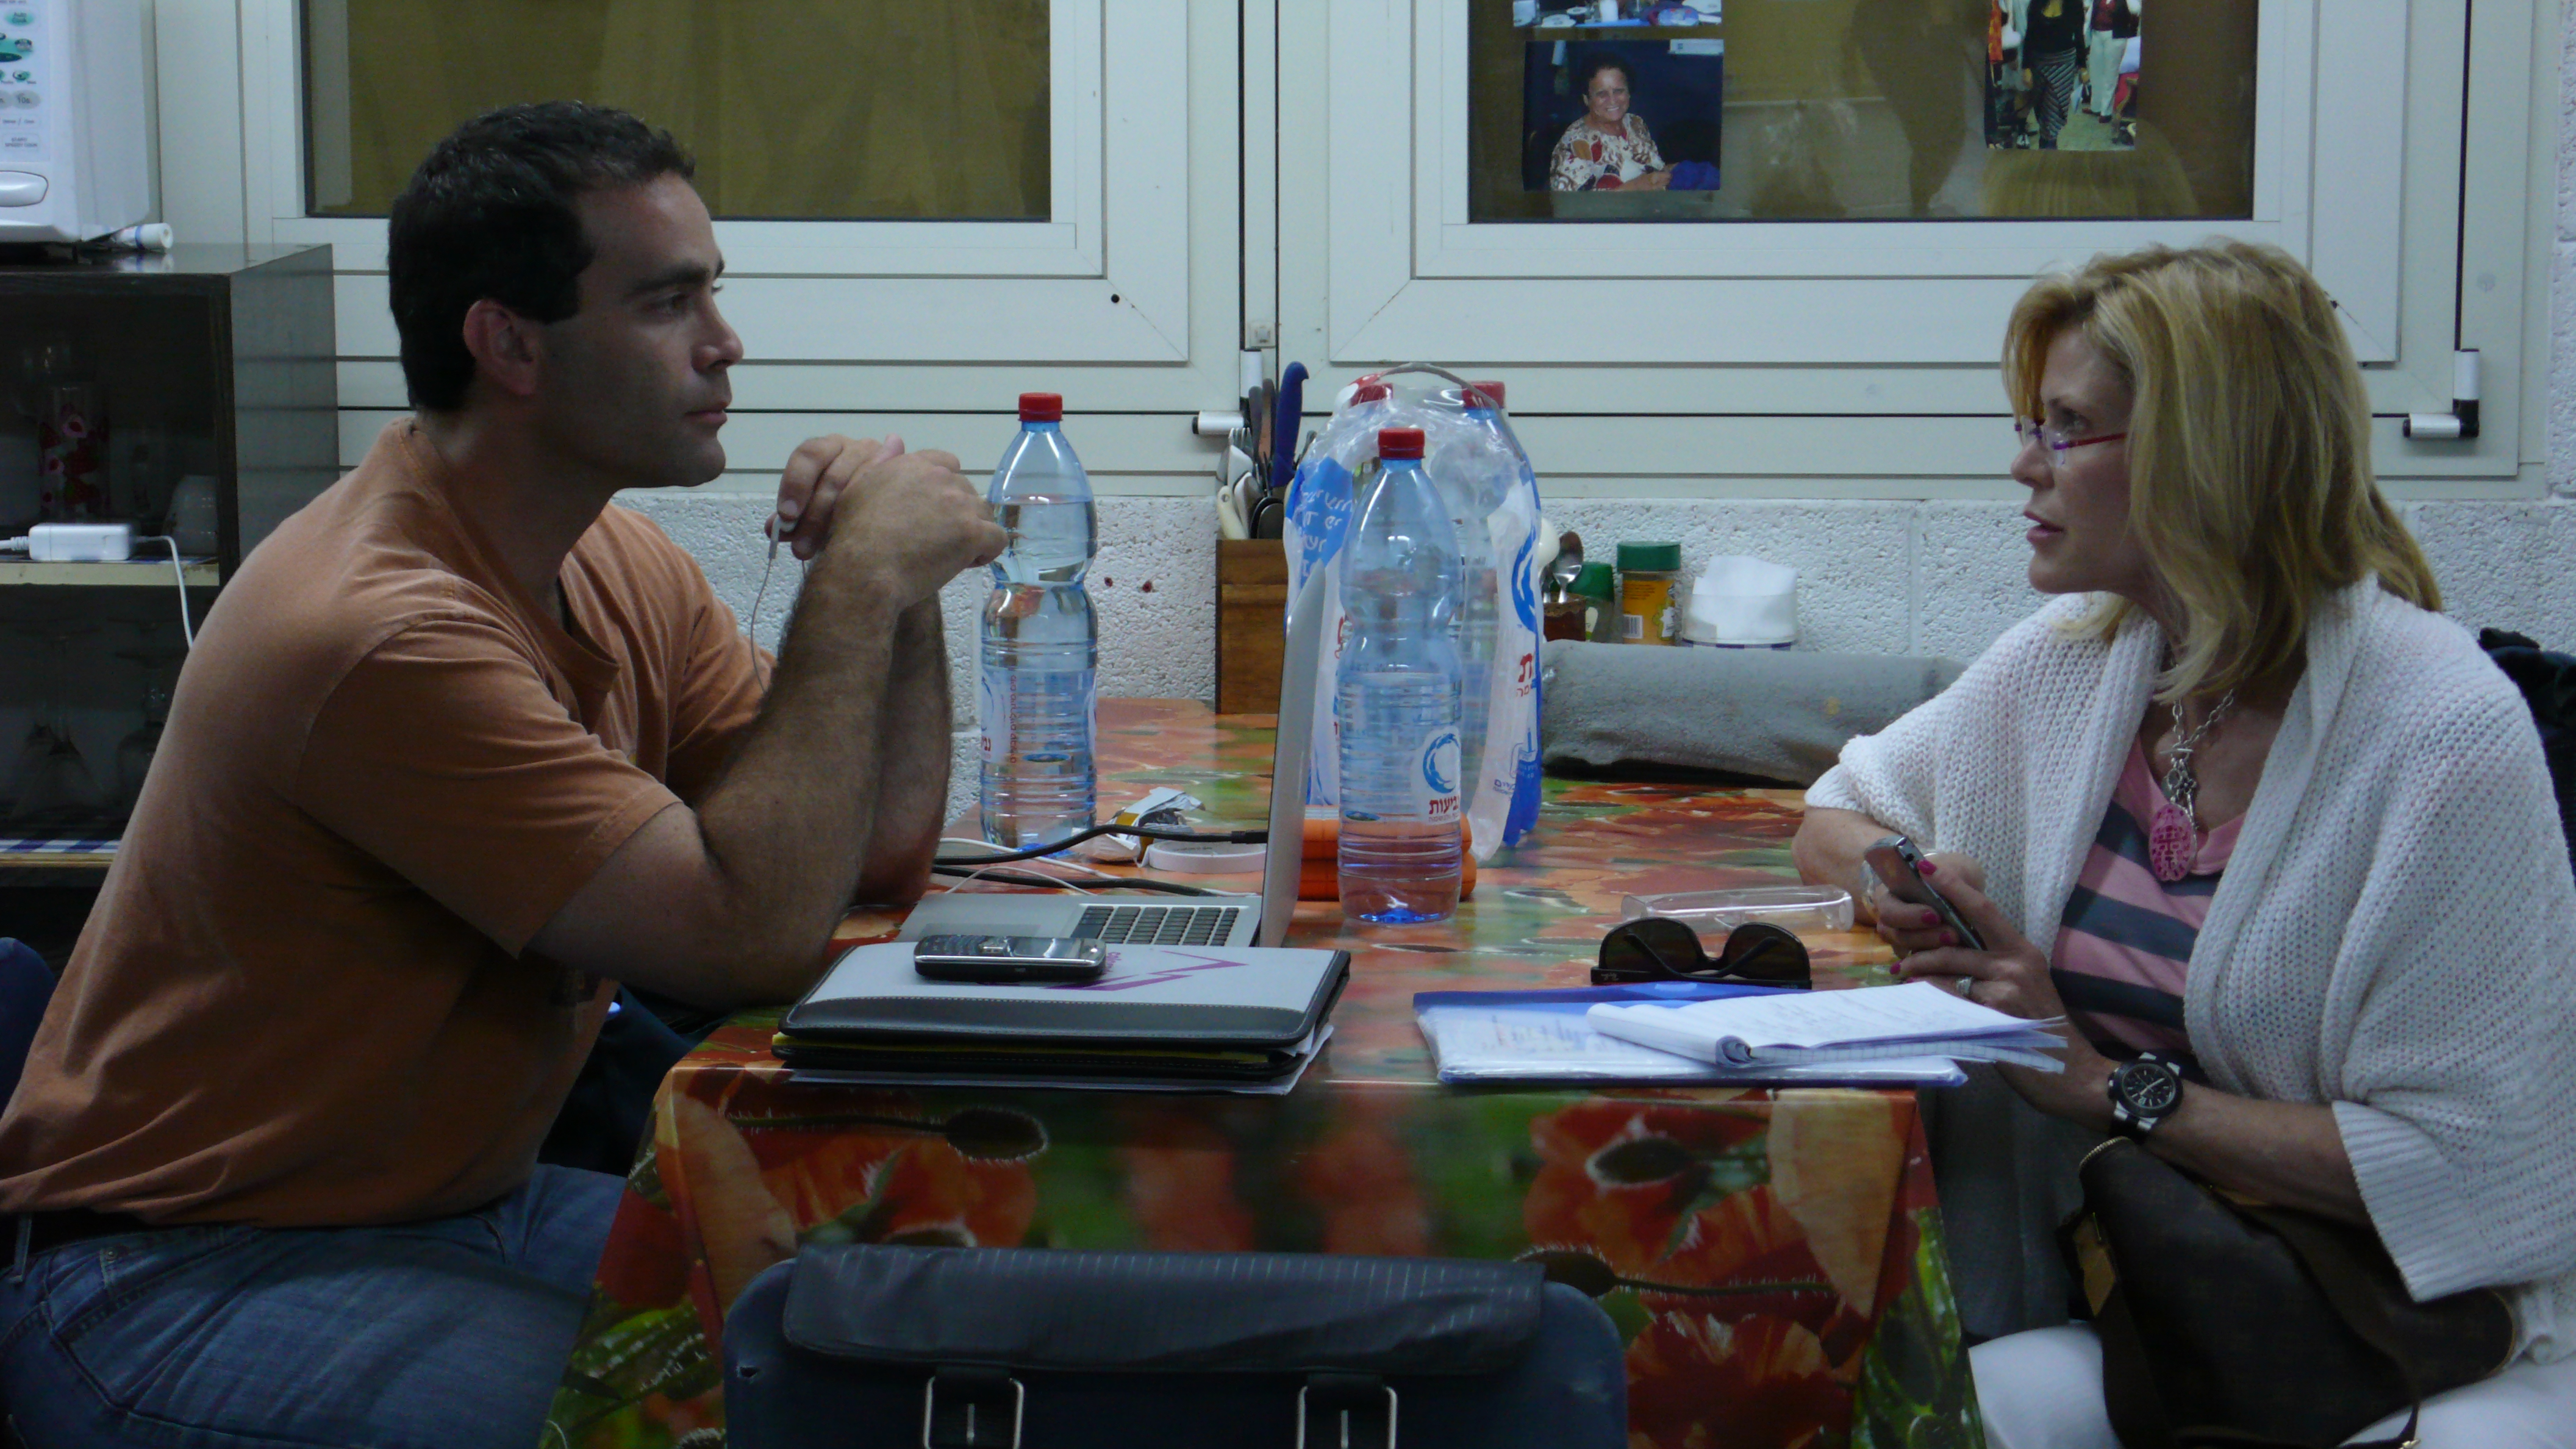 Benjy Oberman and Lisa Kirk Colburn working on production in the Israeli Opera house.